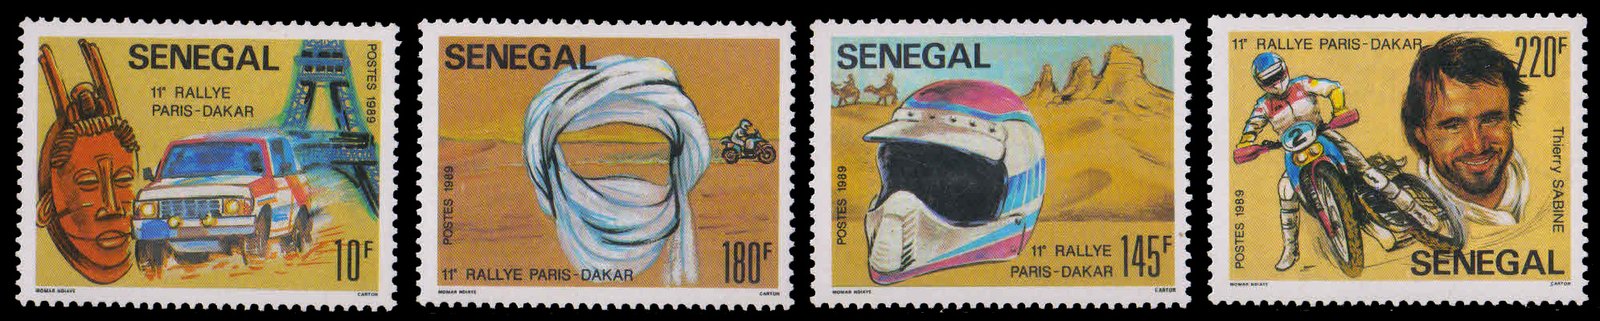 SENEGAL 1989-Paris Darkar Rally, Motocyclist, Rally Car, Set of 4, MNH, s.G. 973-976